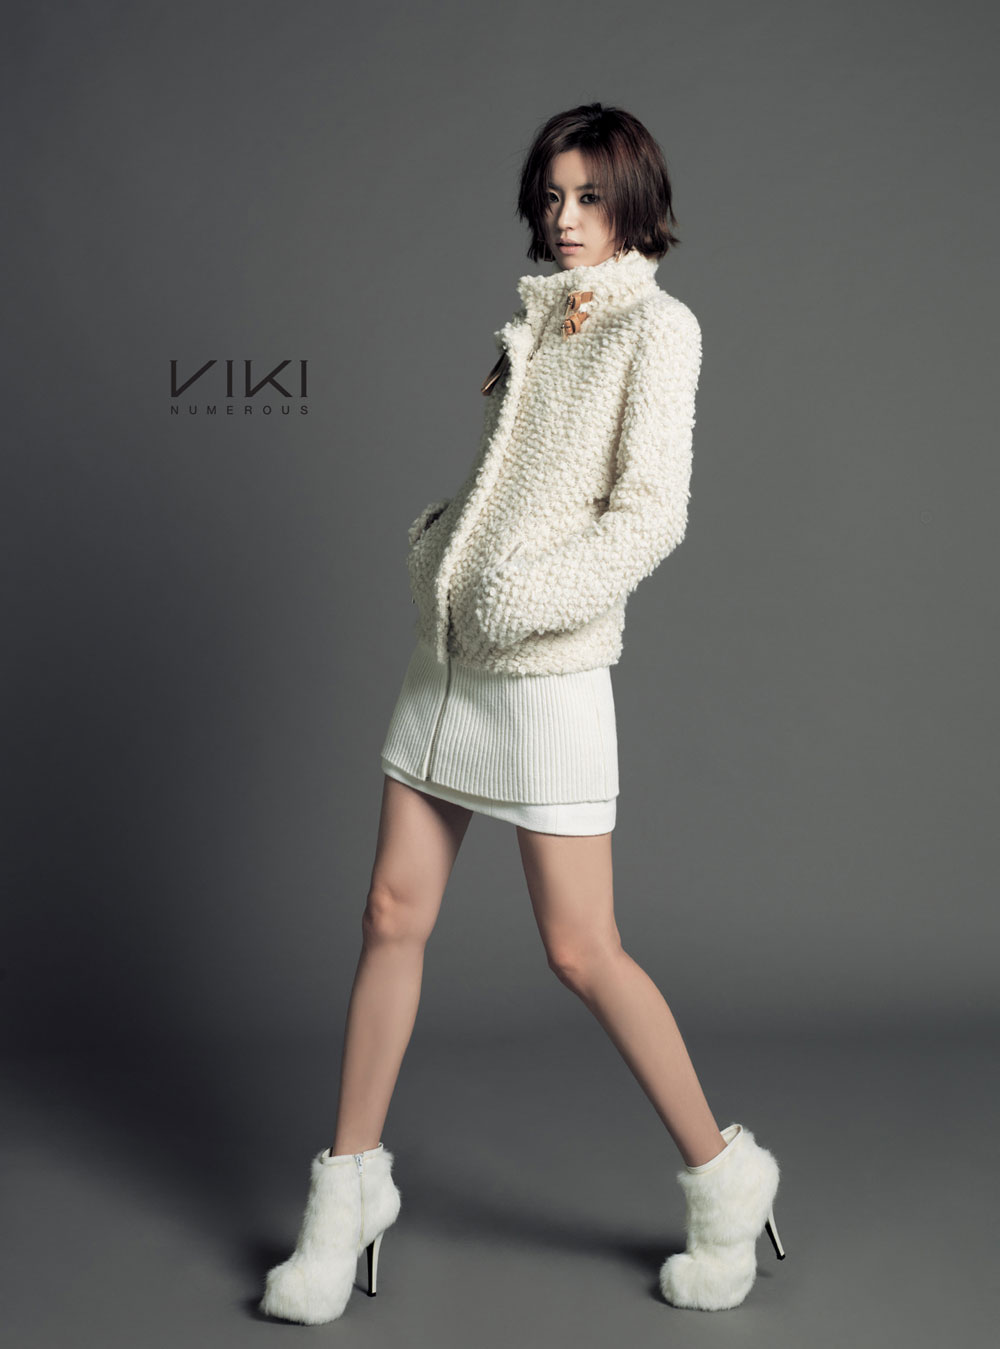 Han Hyo Joo VIKI Numerous fashion brand